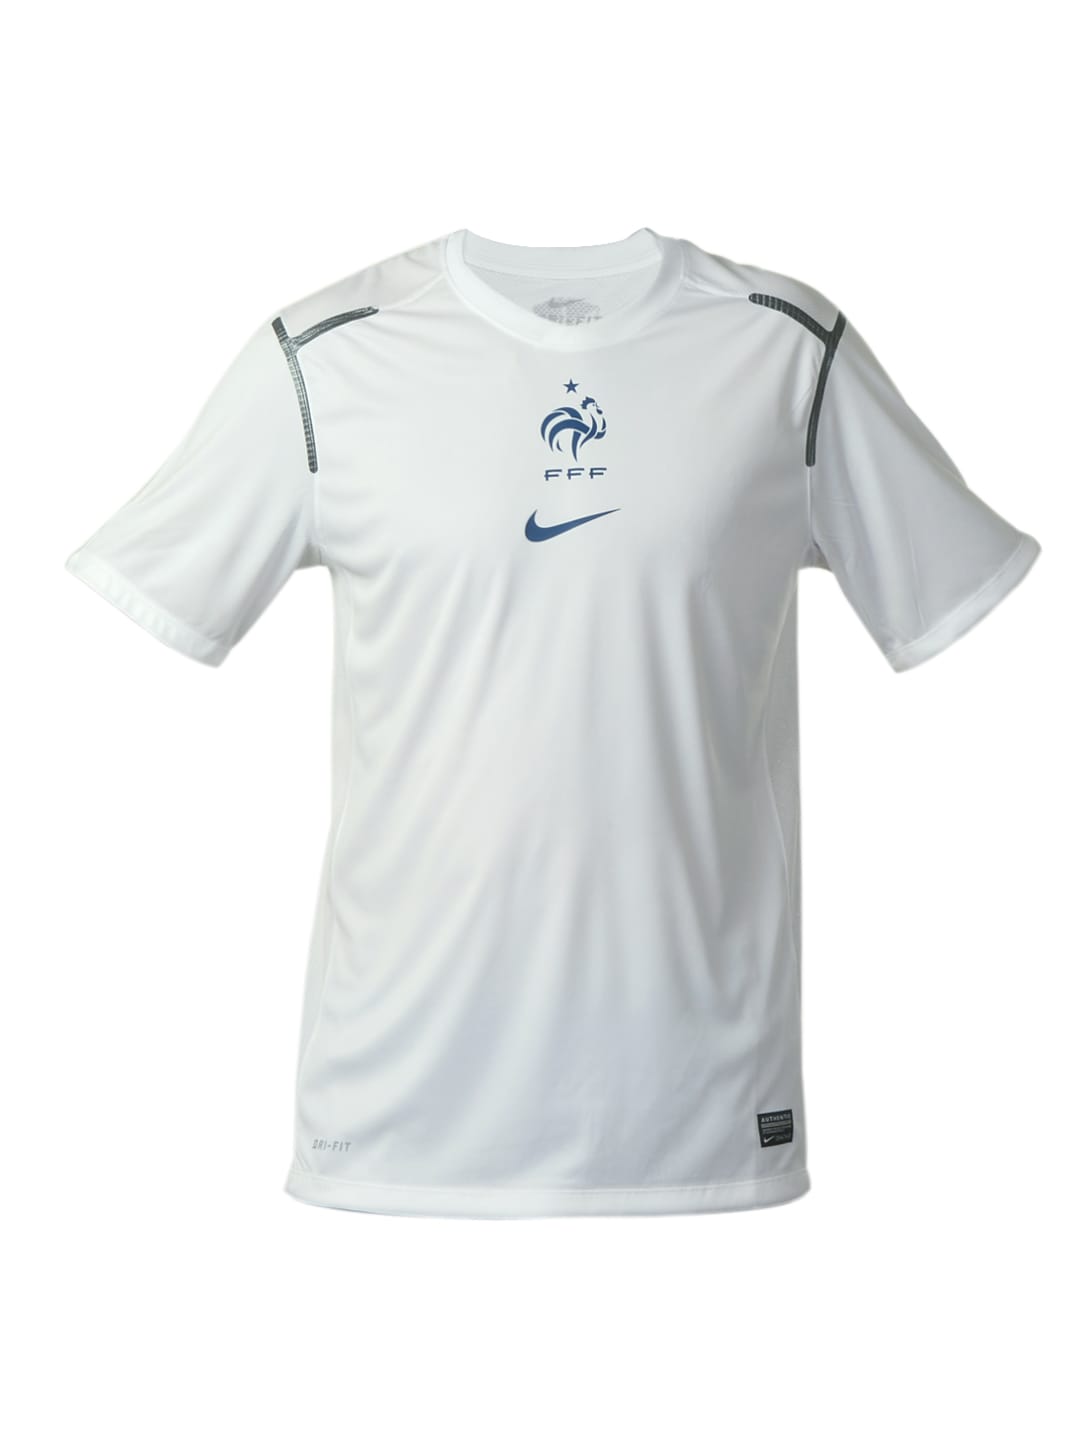 Nike Men White FFF Football T-shirt